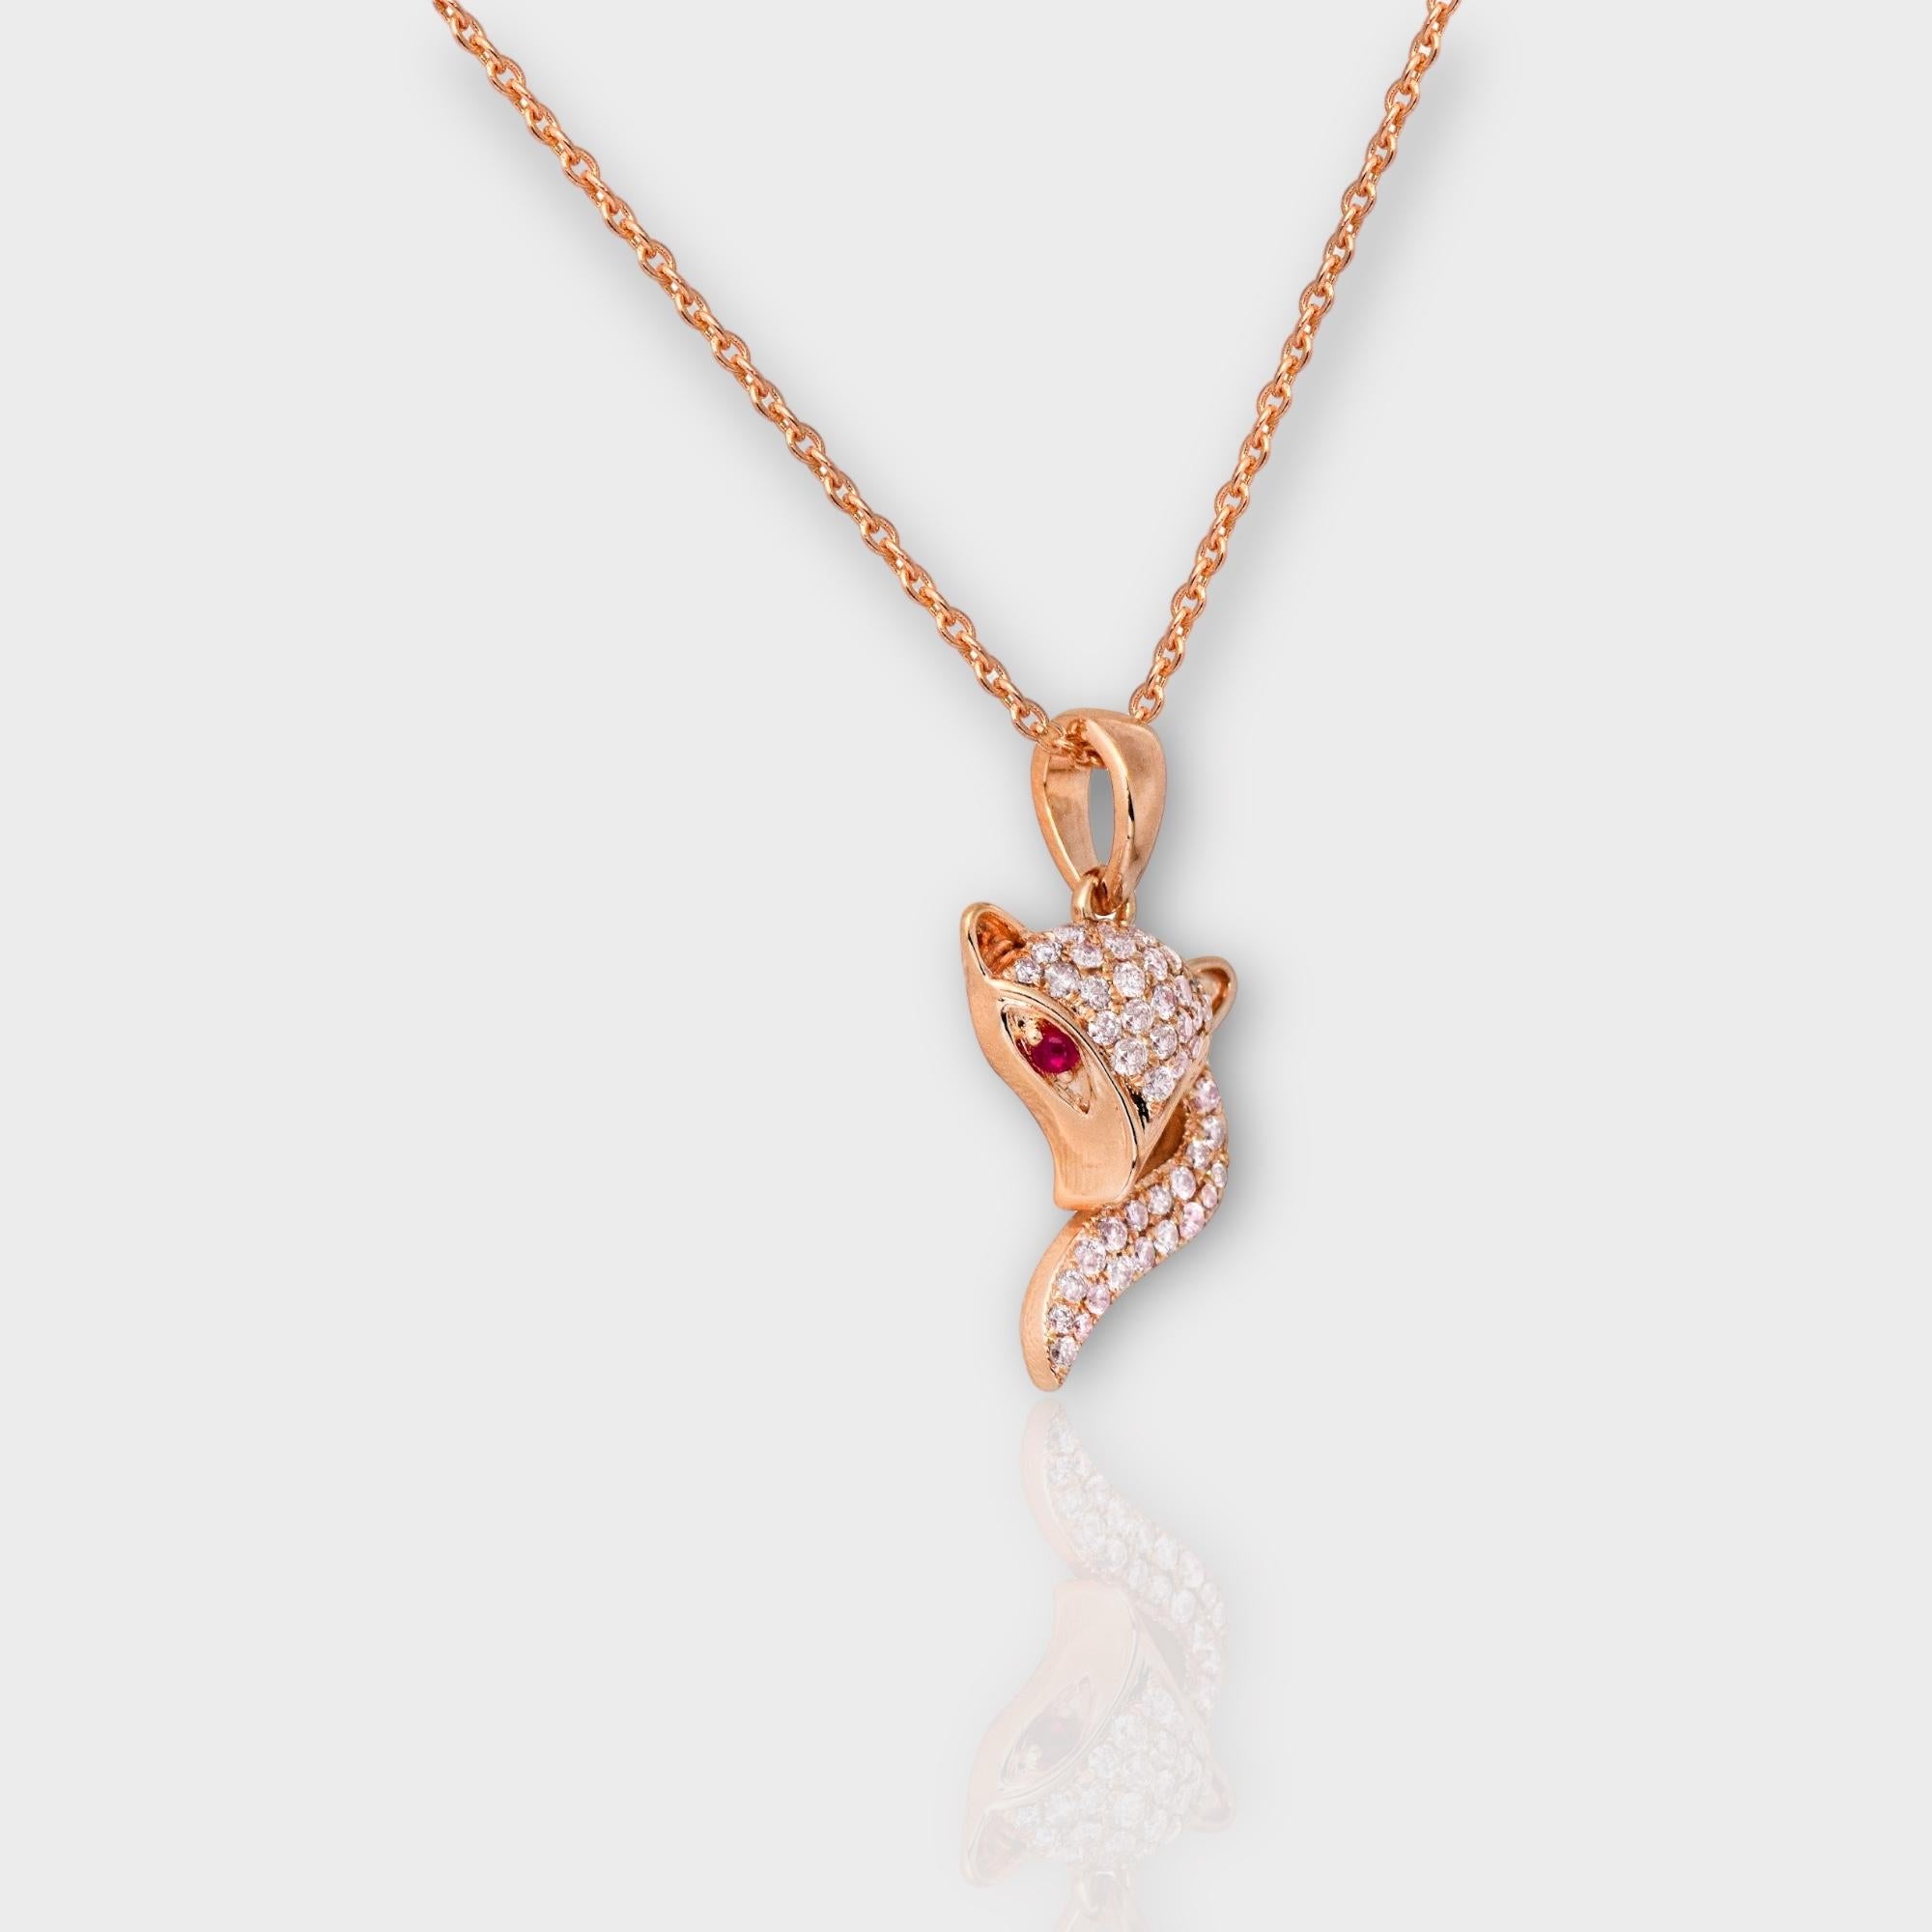 IGI 14K 0.36 ct Natural Pink Diamonds Fox Design Pendant Necklace For Sale 1